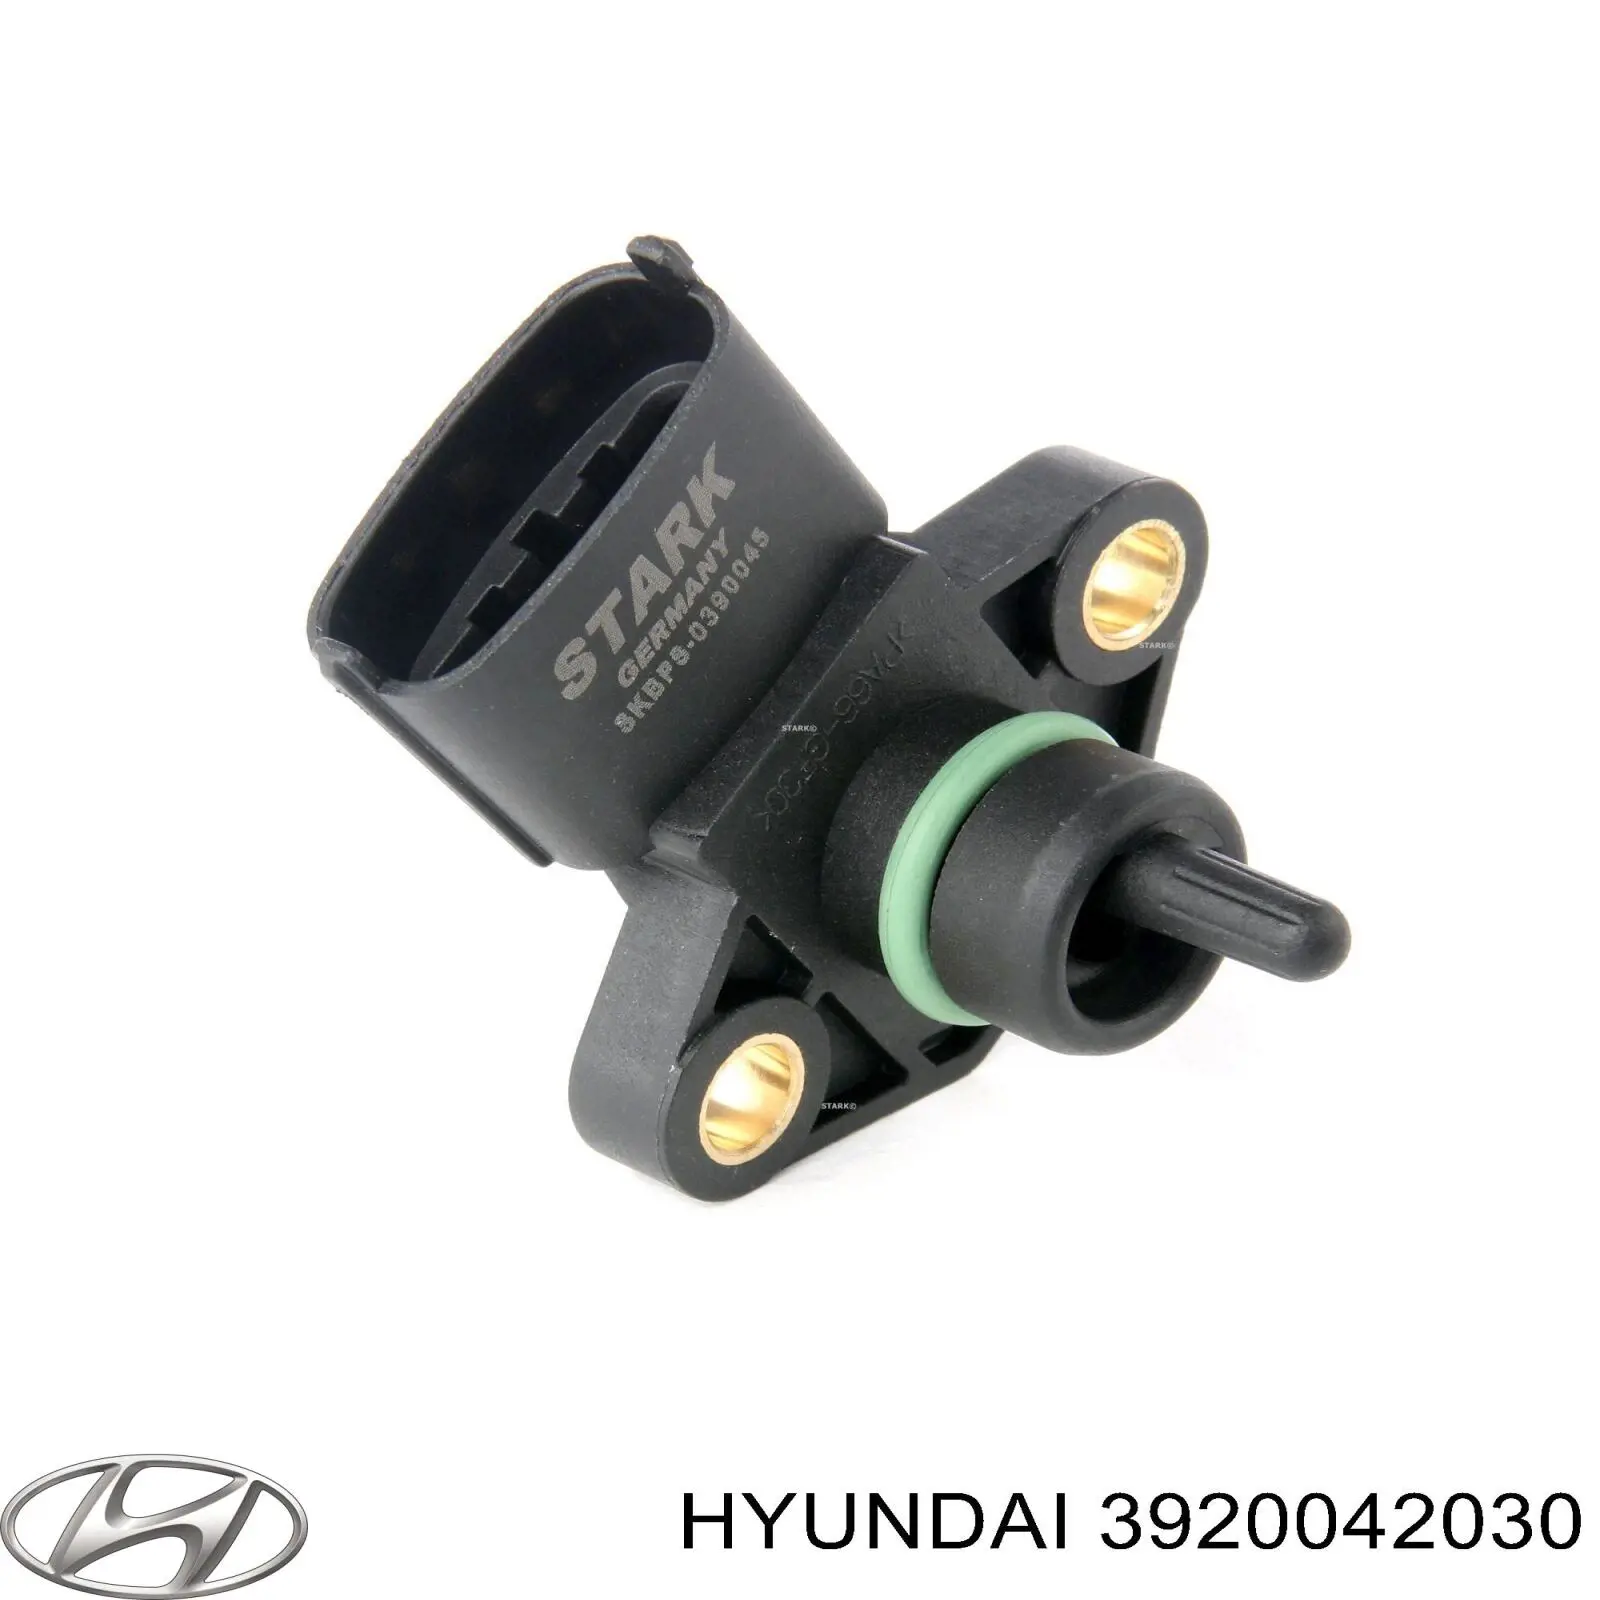 3920042030 Hyundai/Kia sensor de presion de carga (inyeccion de aire turbina)